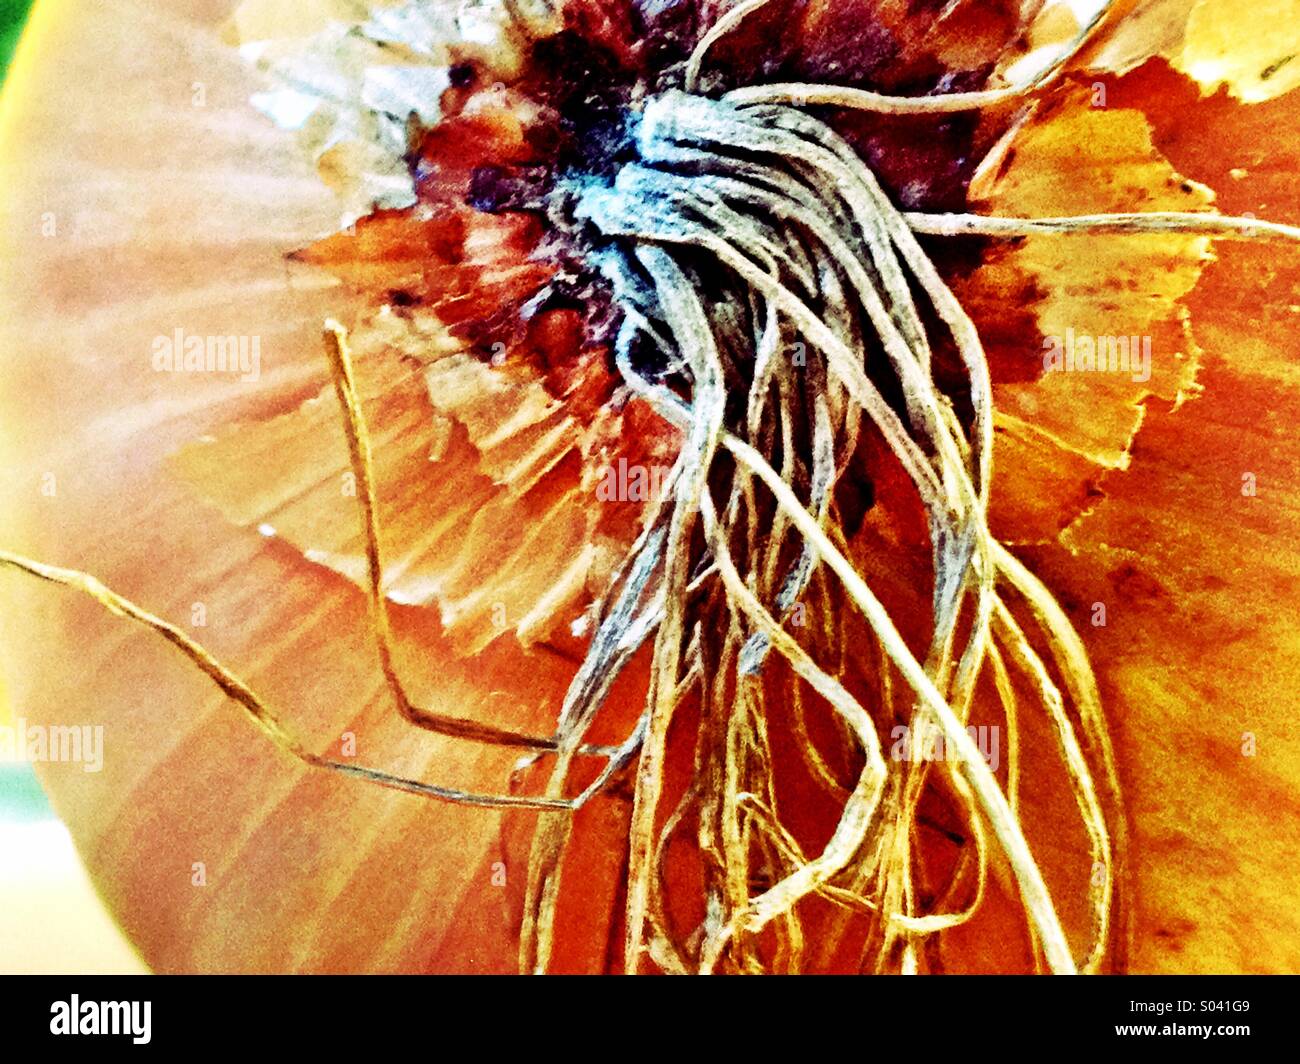 Onion root texture Stock Photo